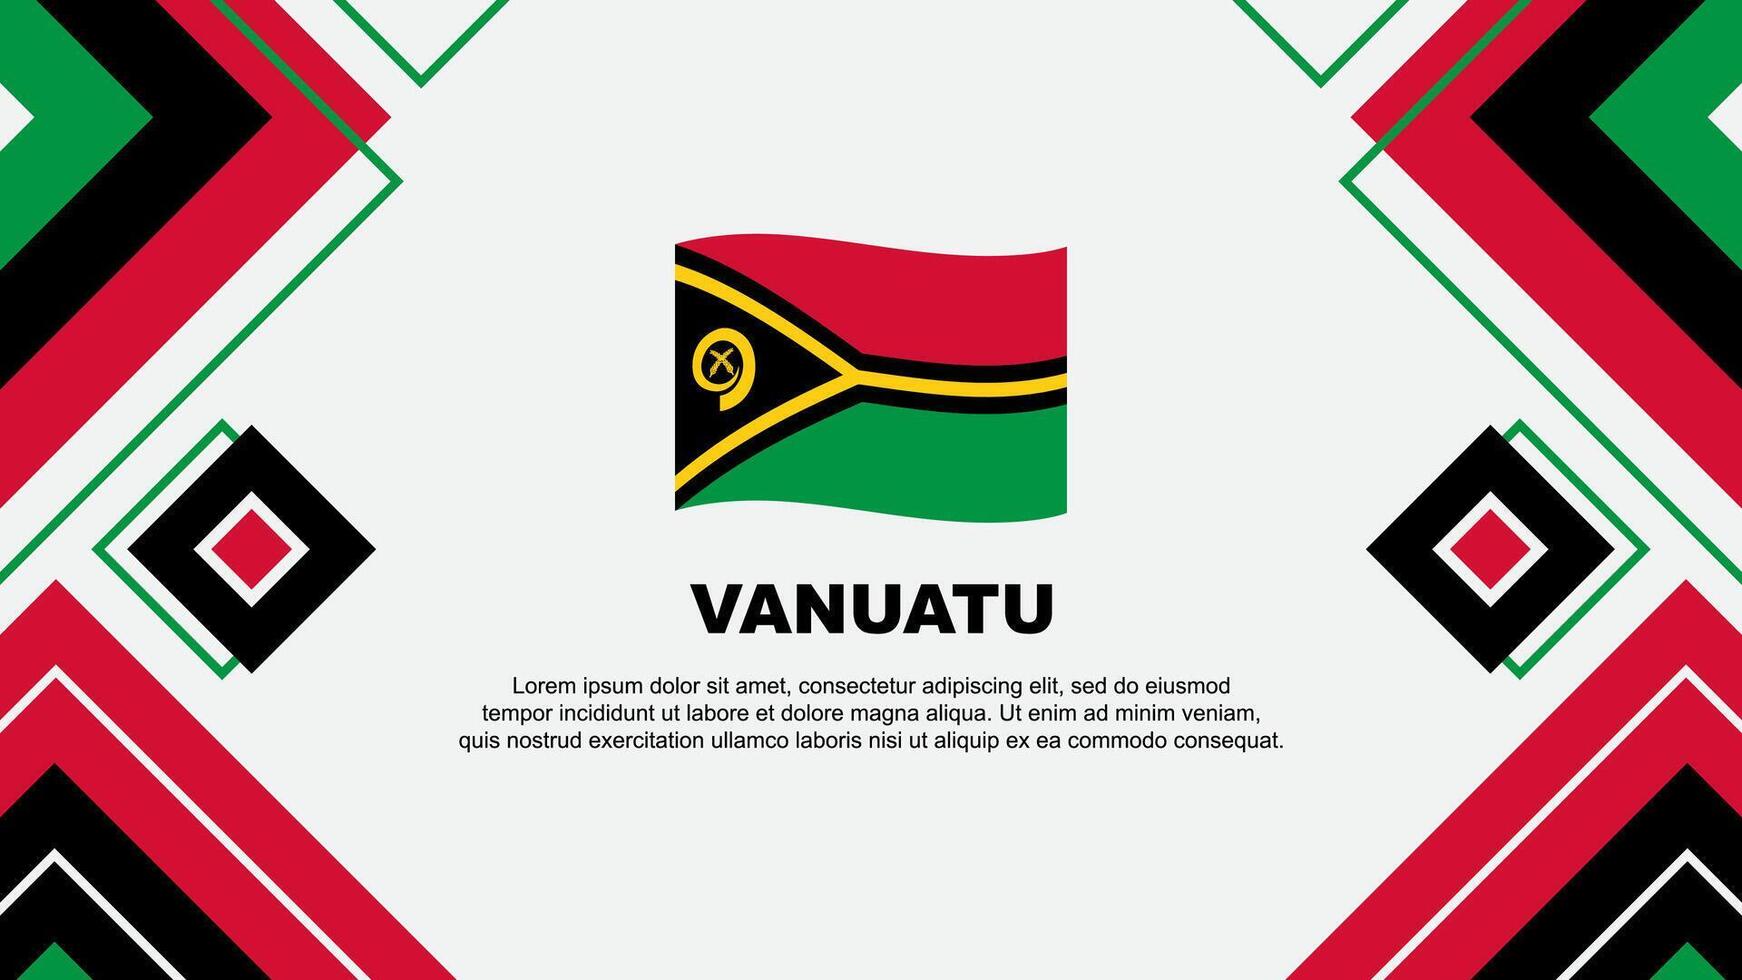 Vanuatu Flag Abstract Background Design Template. Vanuatu Independence Day Banner Wallpaper Vector Illustration. Vanuatu Background